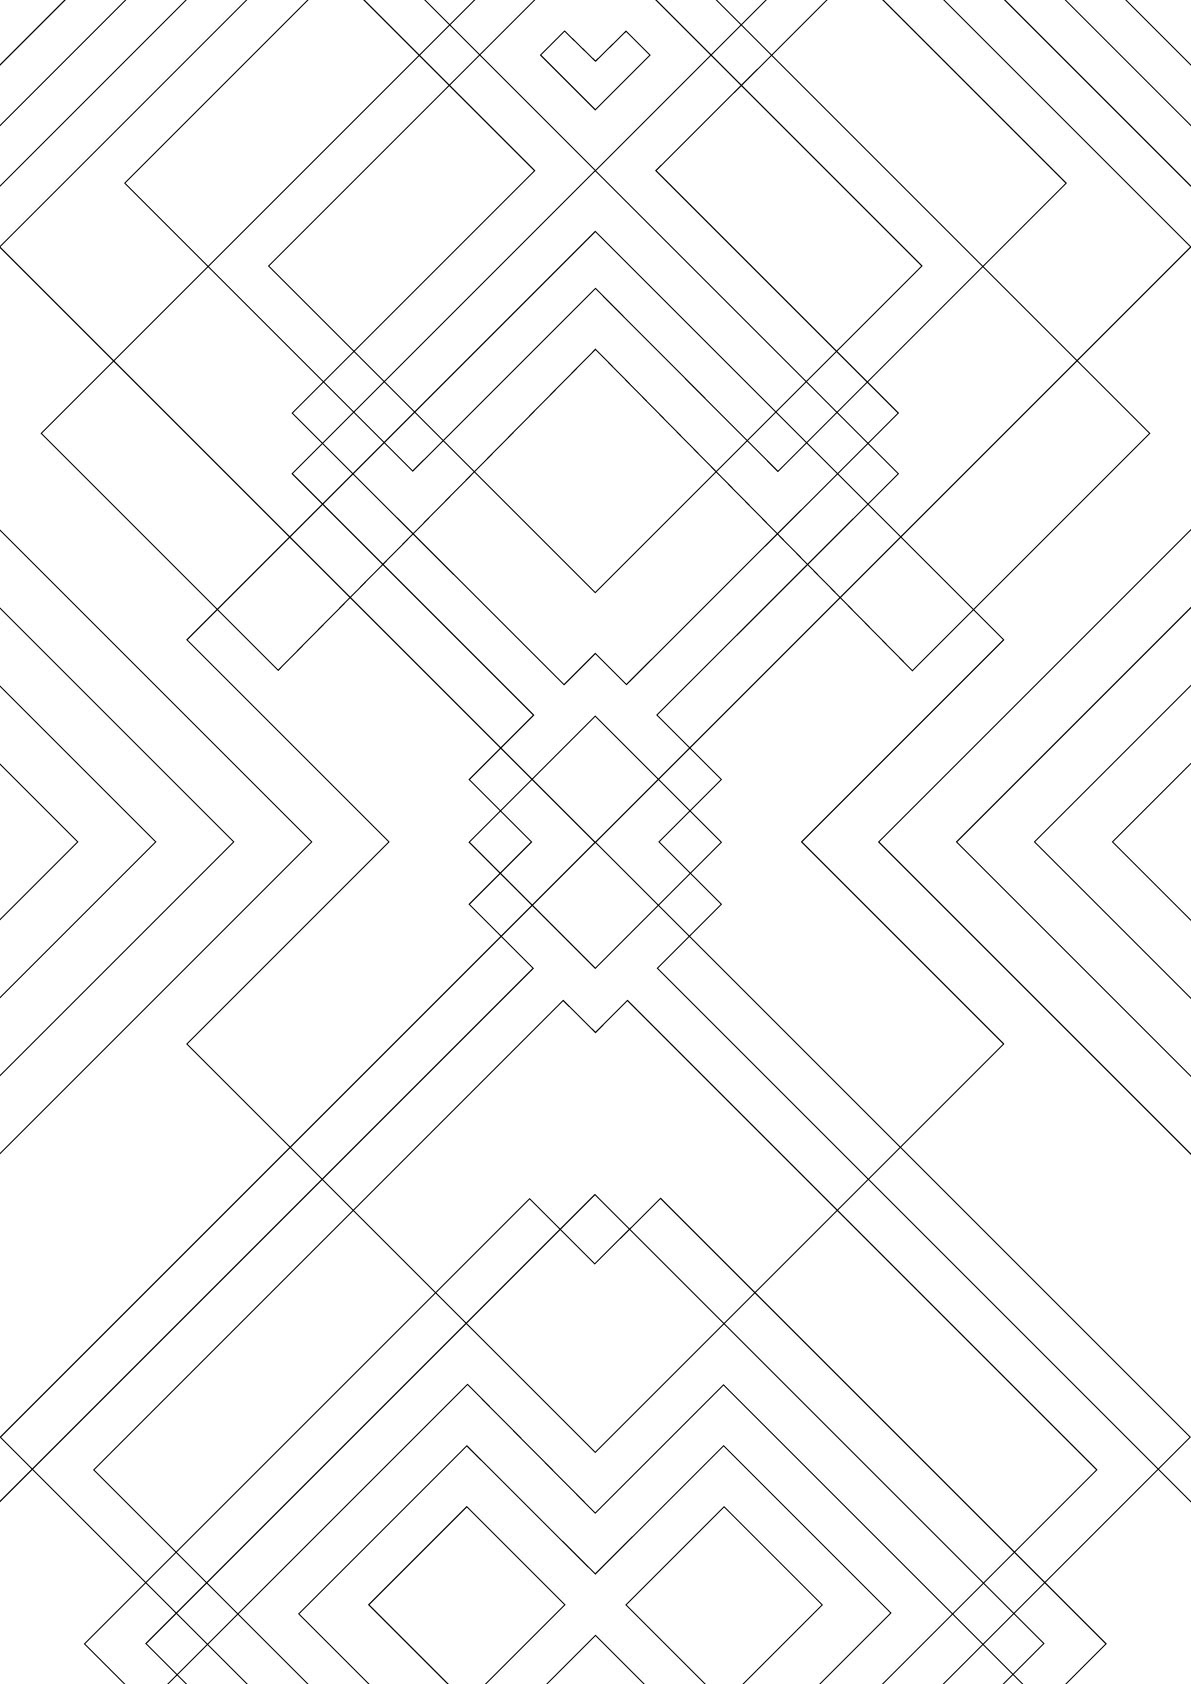 Visual Album porter robinson Polygon Dust Geometric Art Polygons abstract